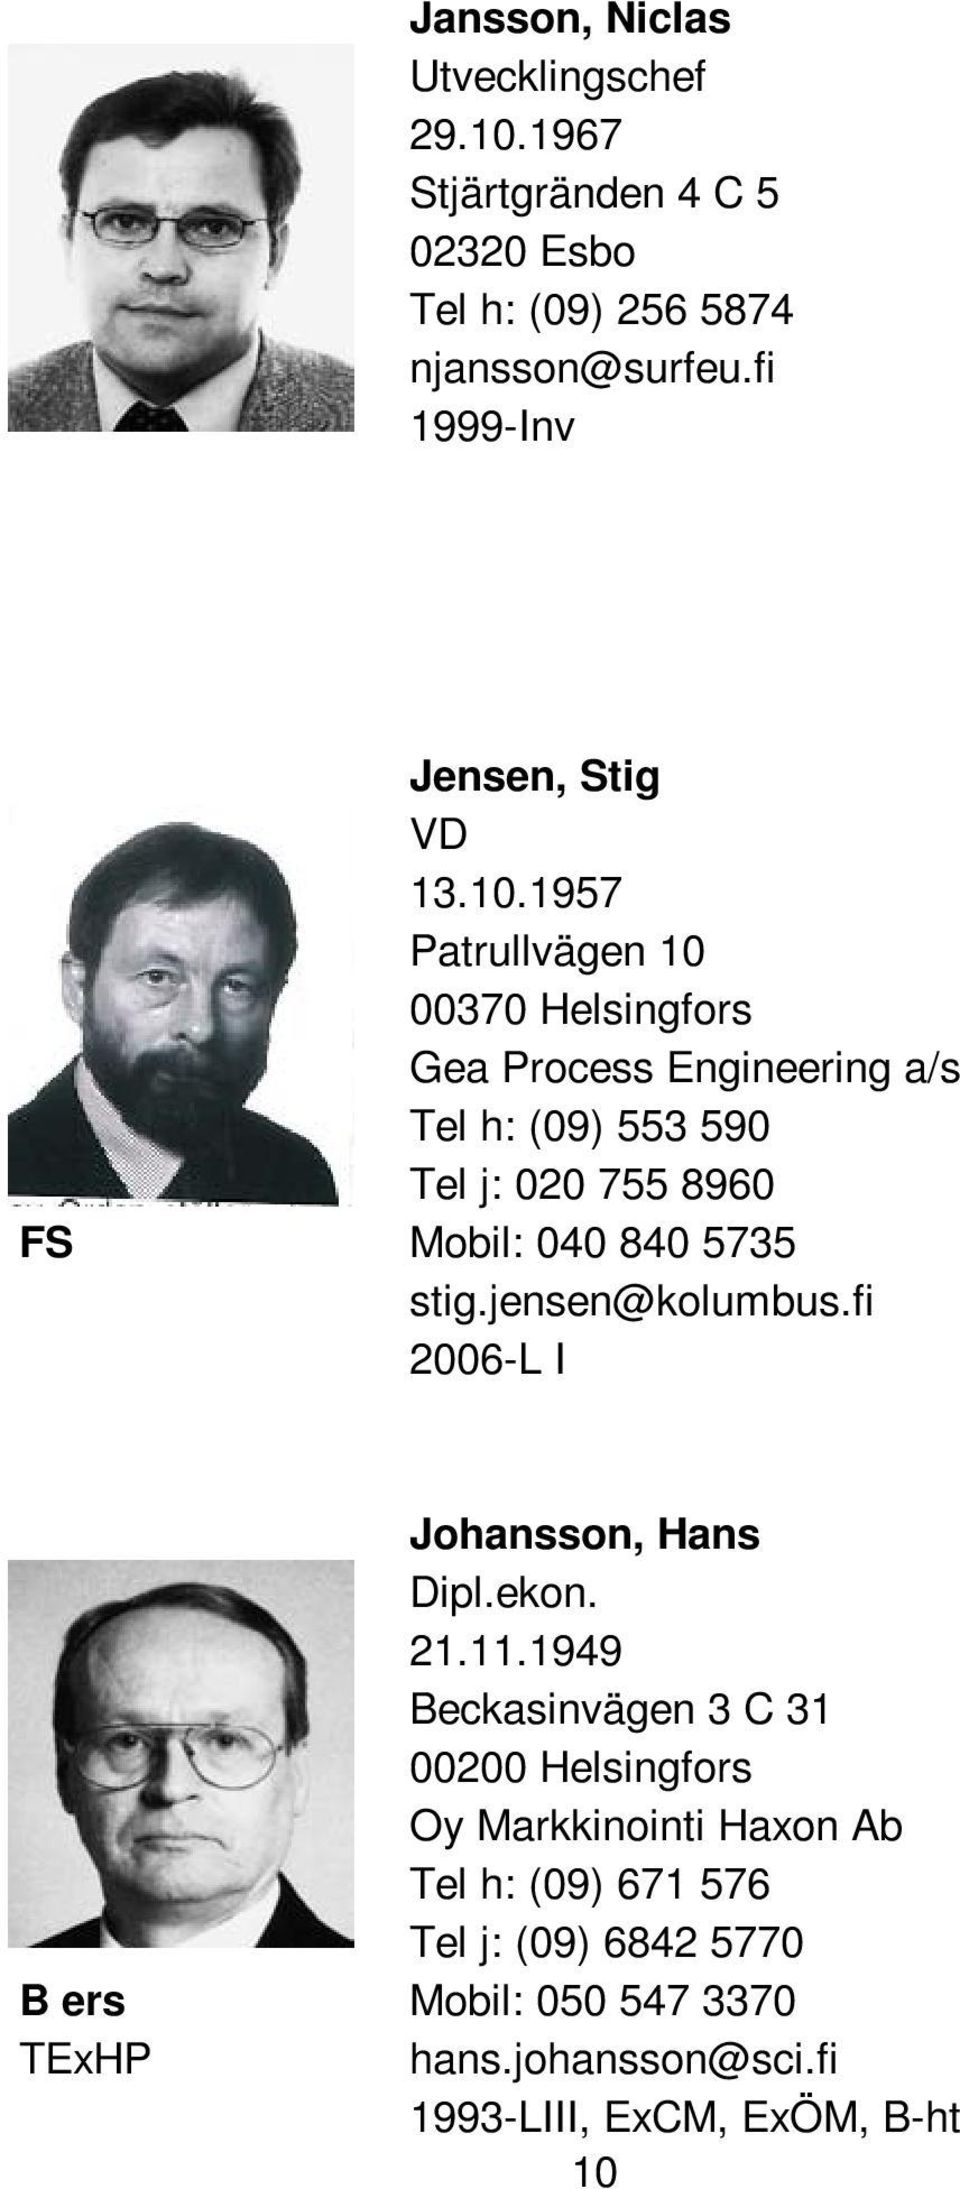 1957 Patrullvägen 10 00370 Helsingfors Gea Process Engineering a/s Tel h: (09) 553 590 Tel j: 020 755 8960 FS Mobil: 040 840 5735